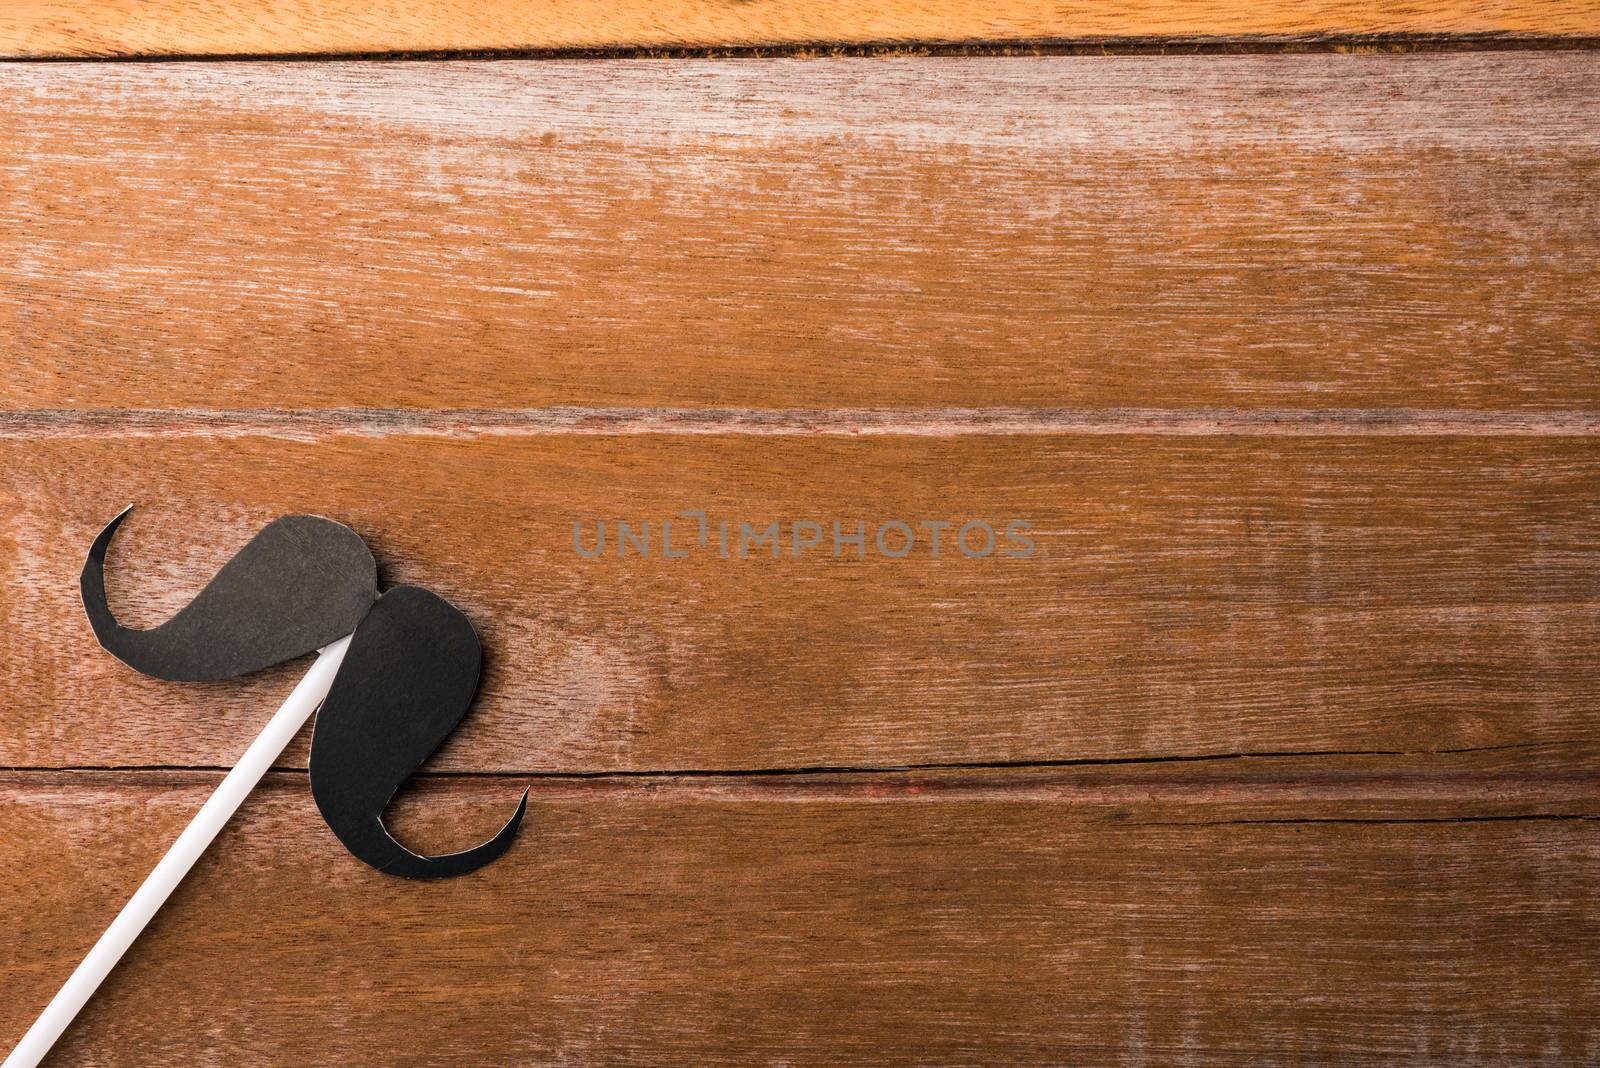 Black mustache paper on wooden background by Sorapop